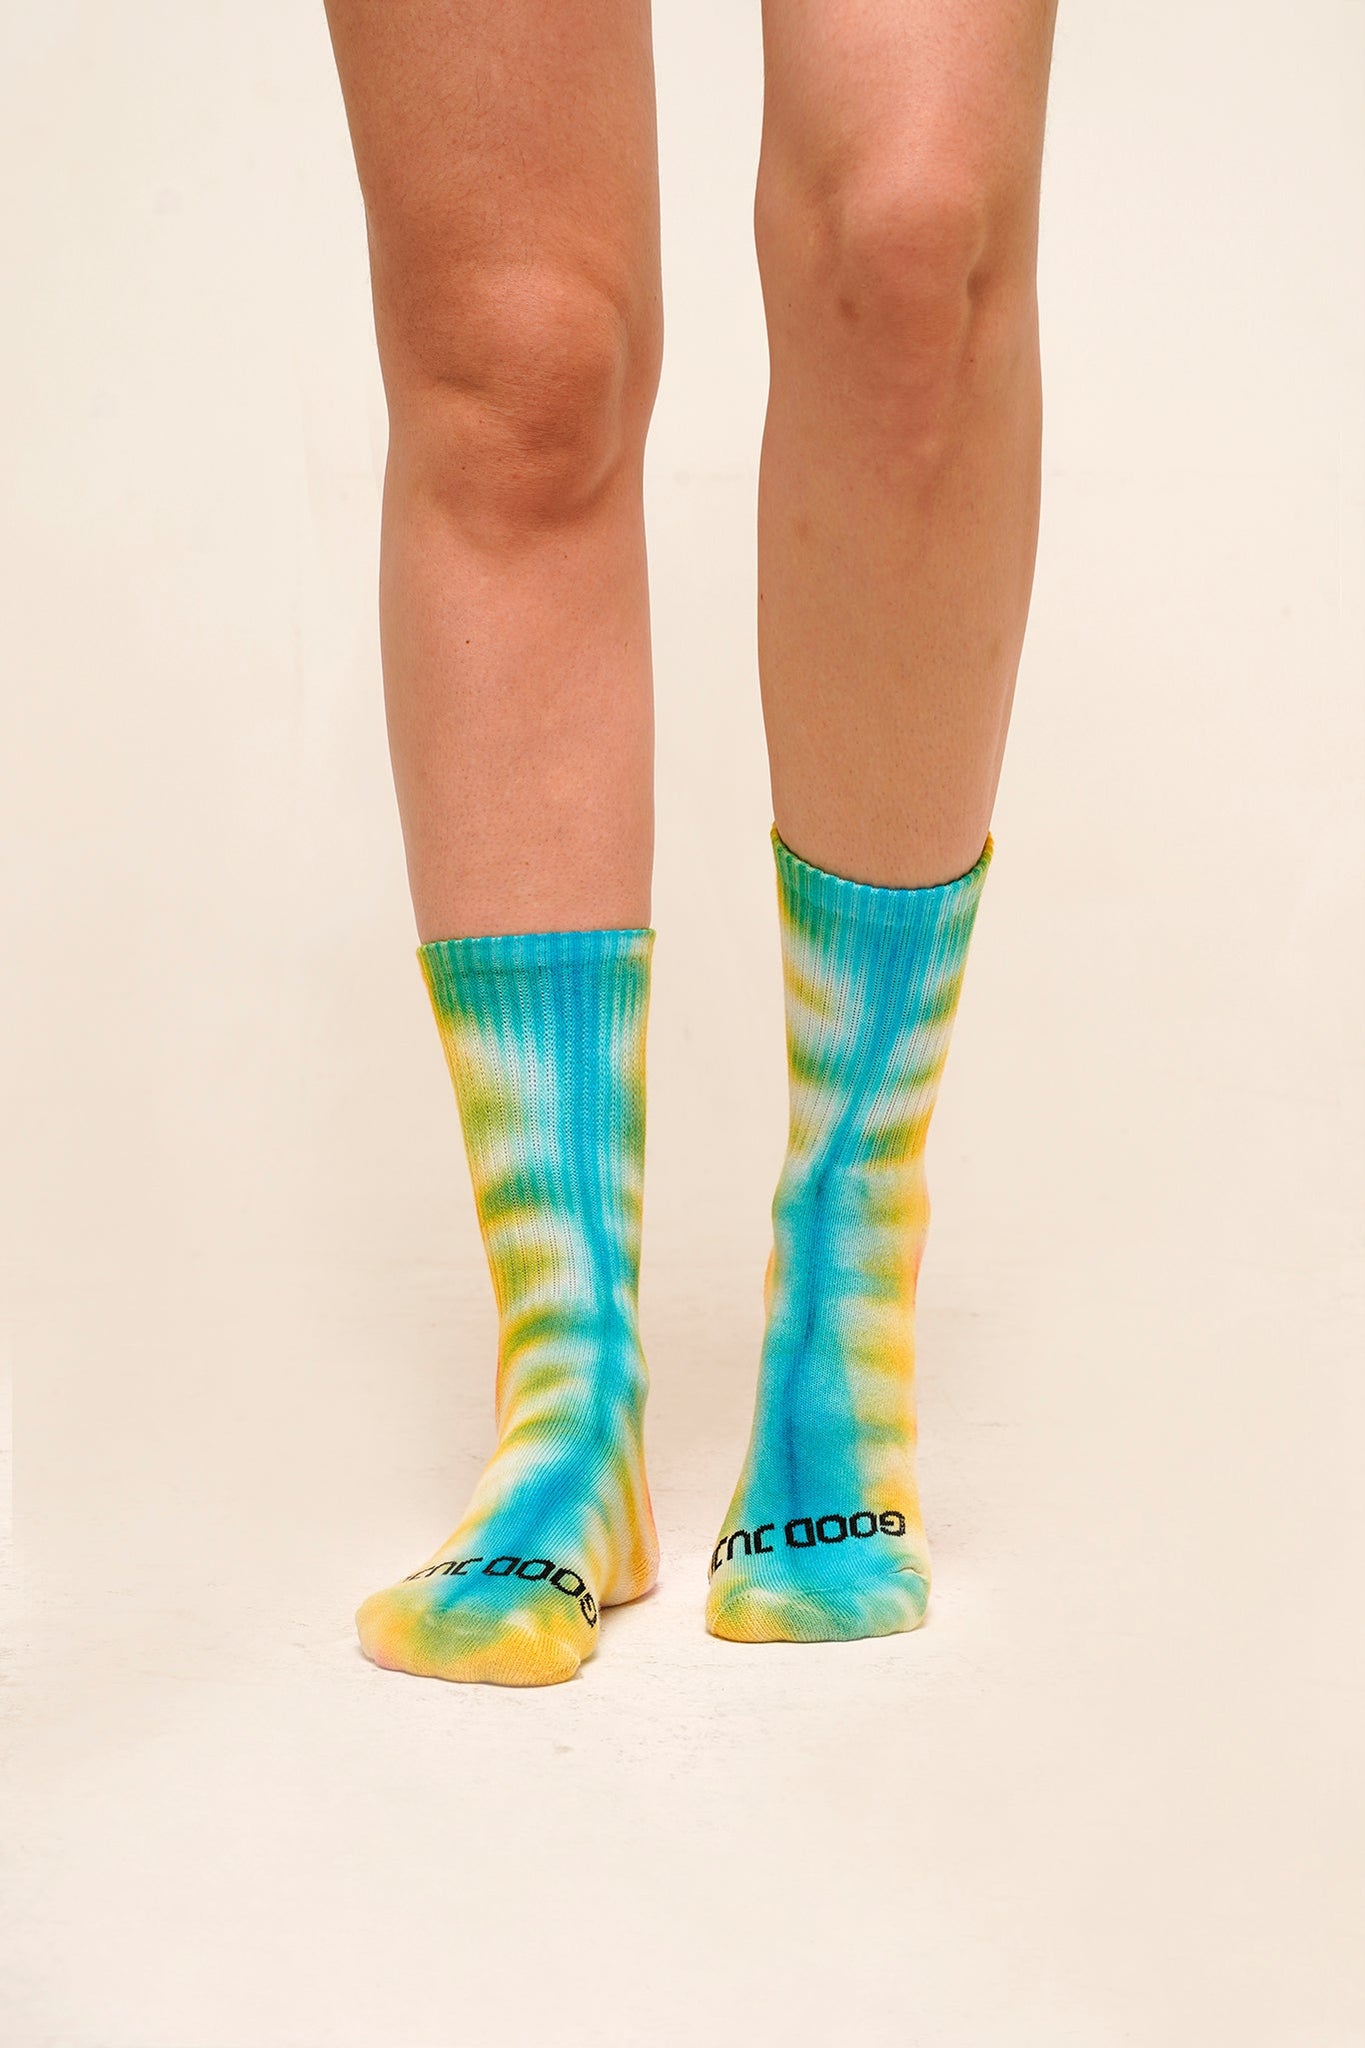 LIVLOLA x Good Juju Tie-Dye Socks